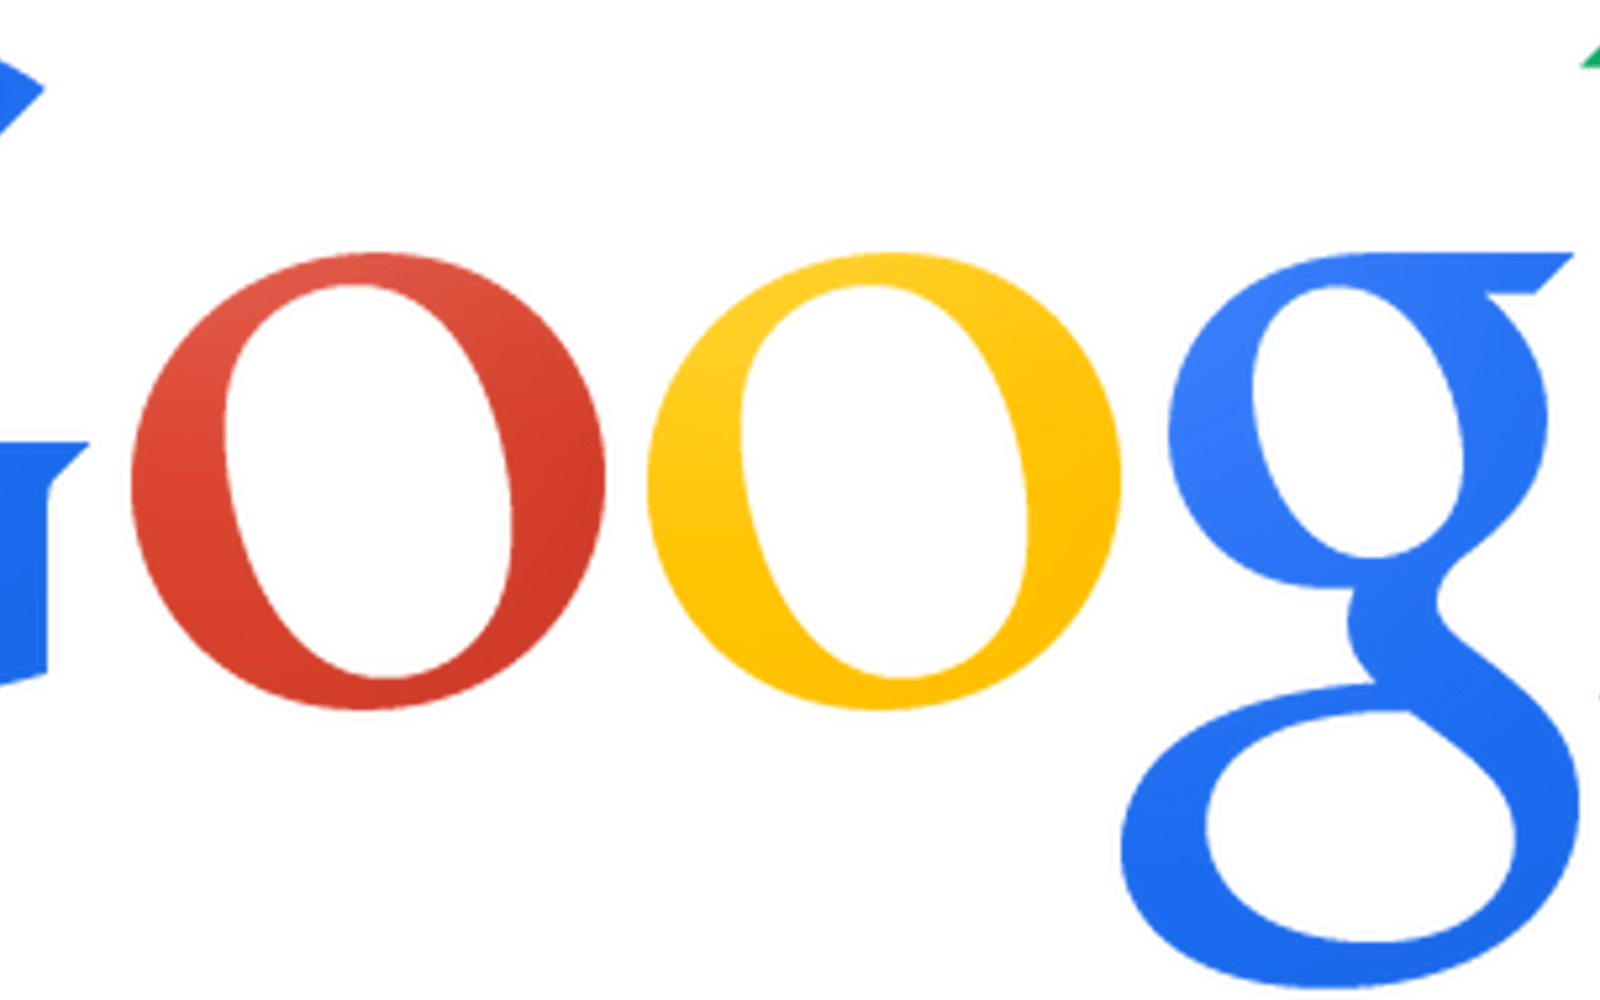 Chrome New Logo - Chrome for Android beta apparently shows new, flatter Google logo on ...